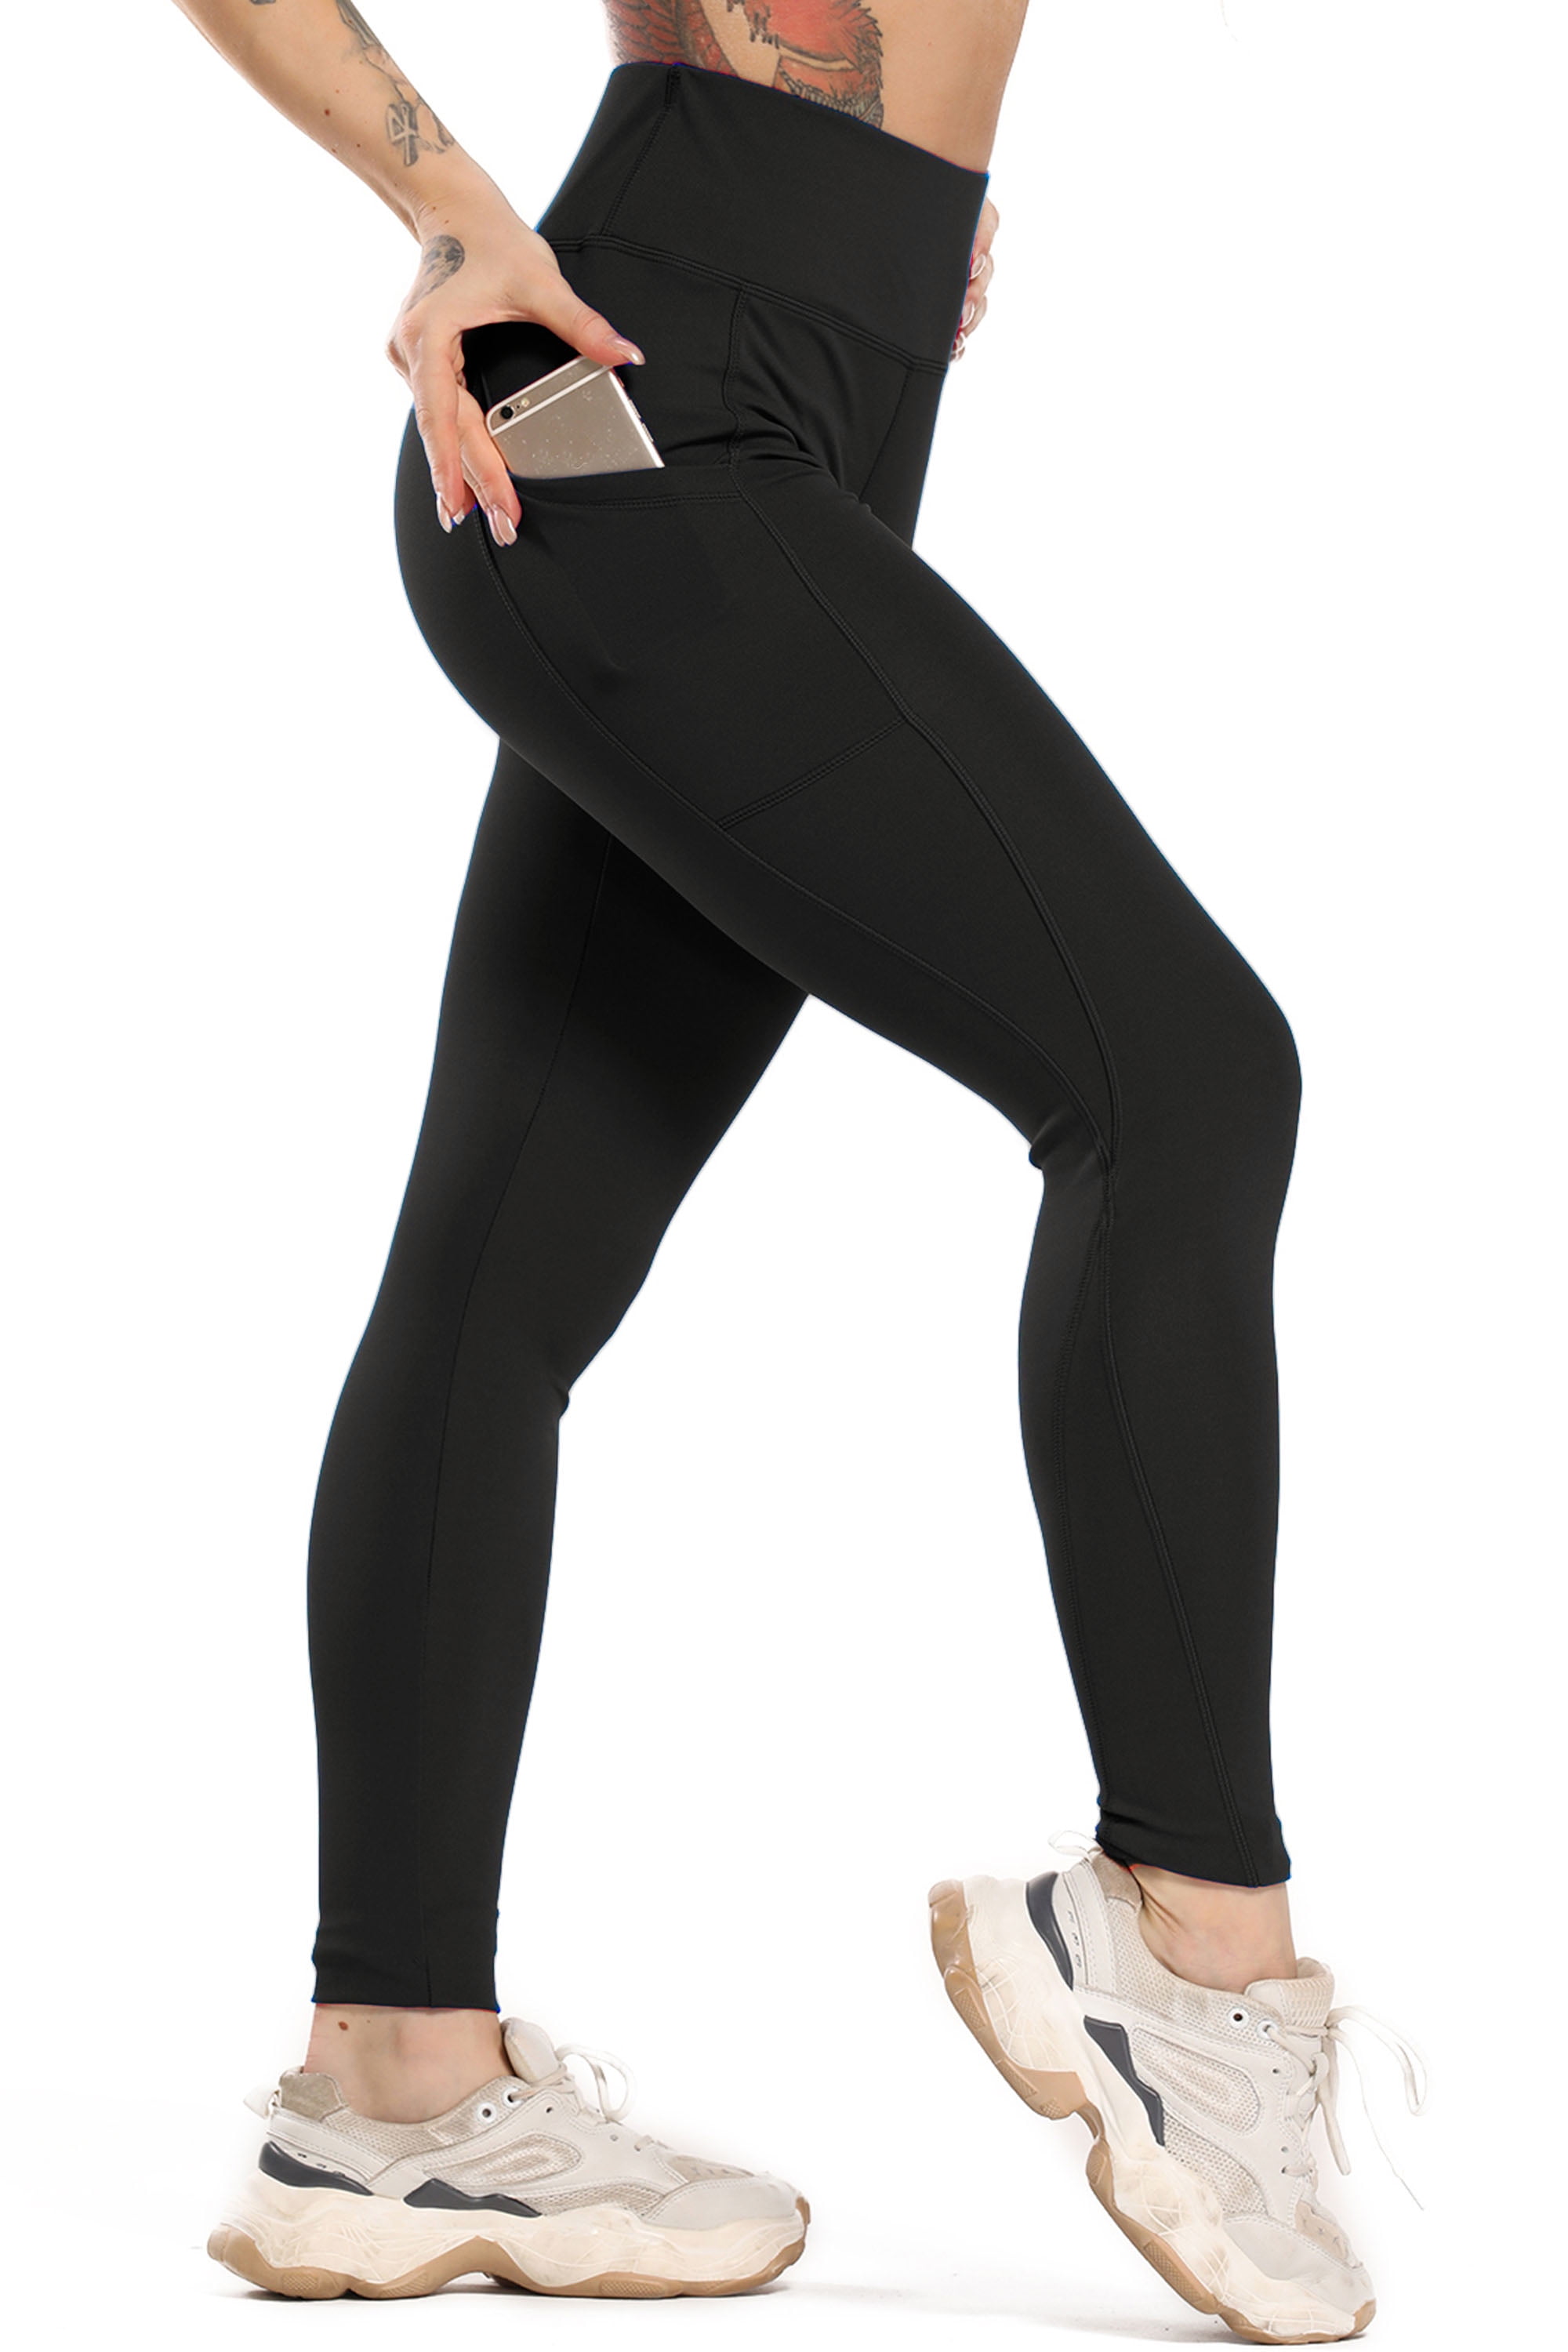 RainbowTree Womens Out Pocket High Waist Yoga Leggings,Tummy Control,Pocket Workout Yoga Pant Indoor Exercise